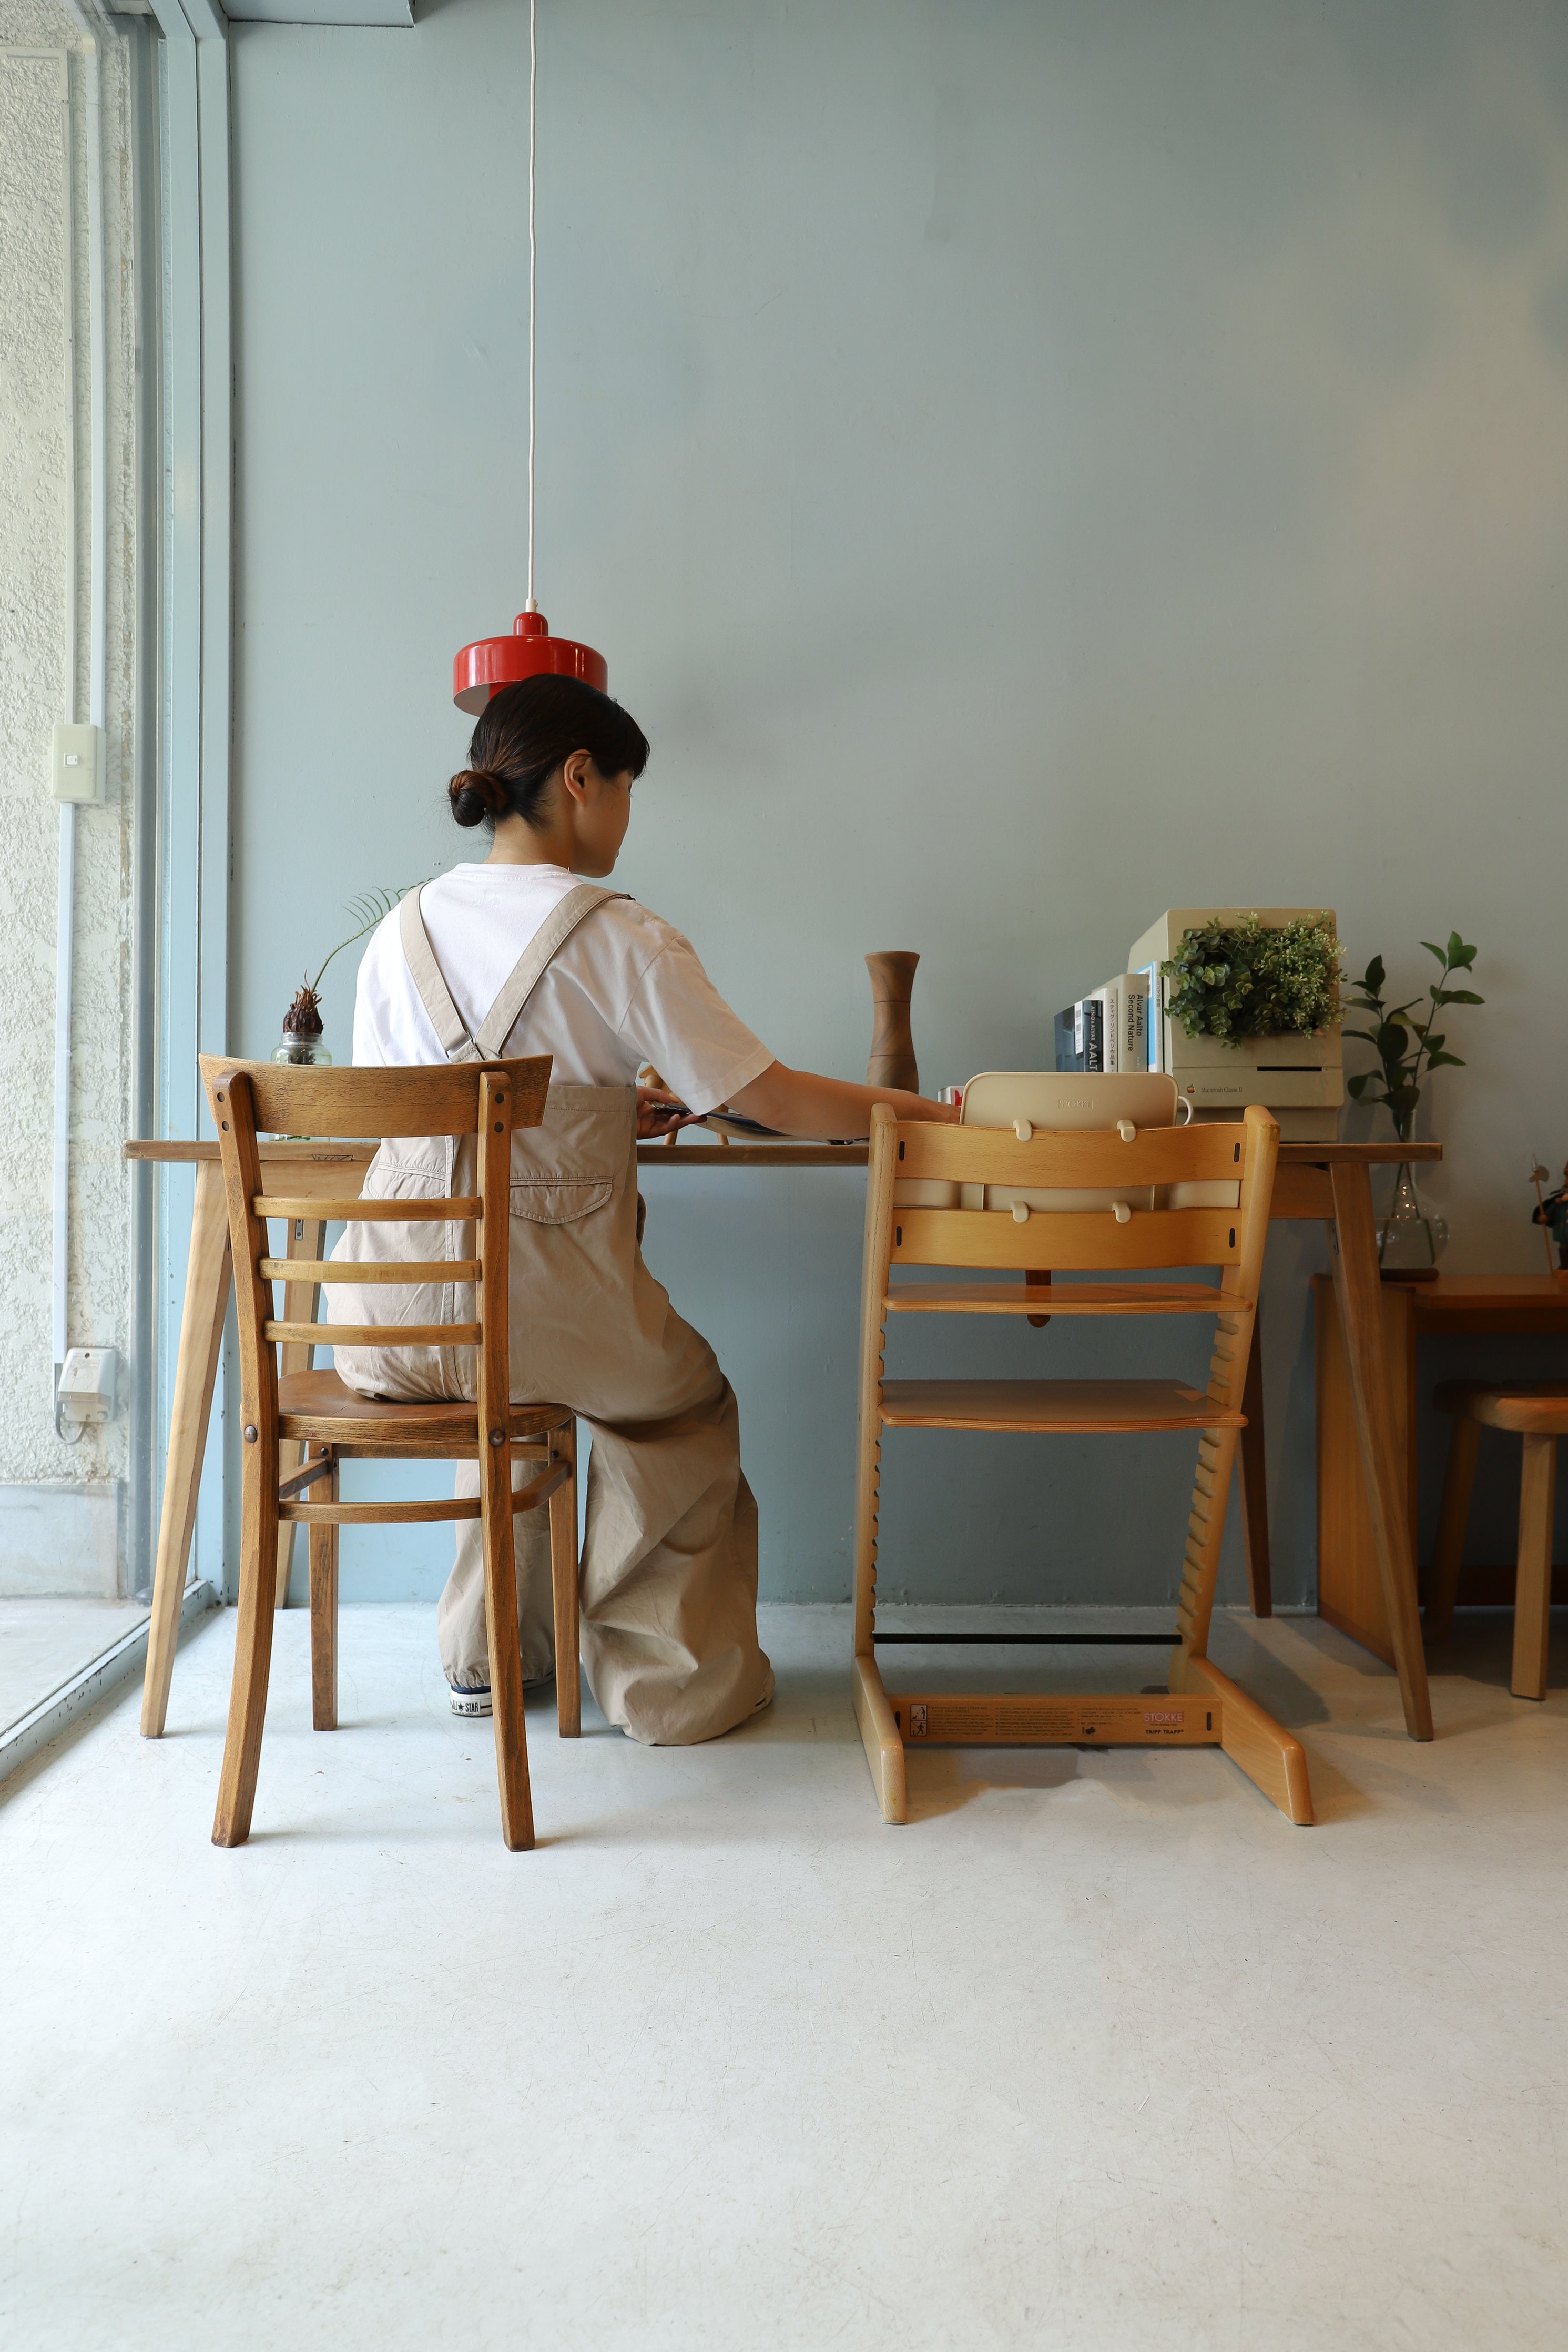 Japanese Vintage Work Table/ジャパンヴィンテージ ワークテーブル ダイニングテーブル